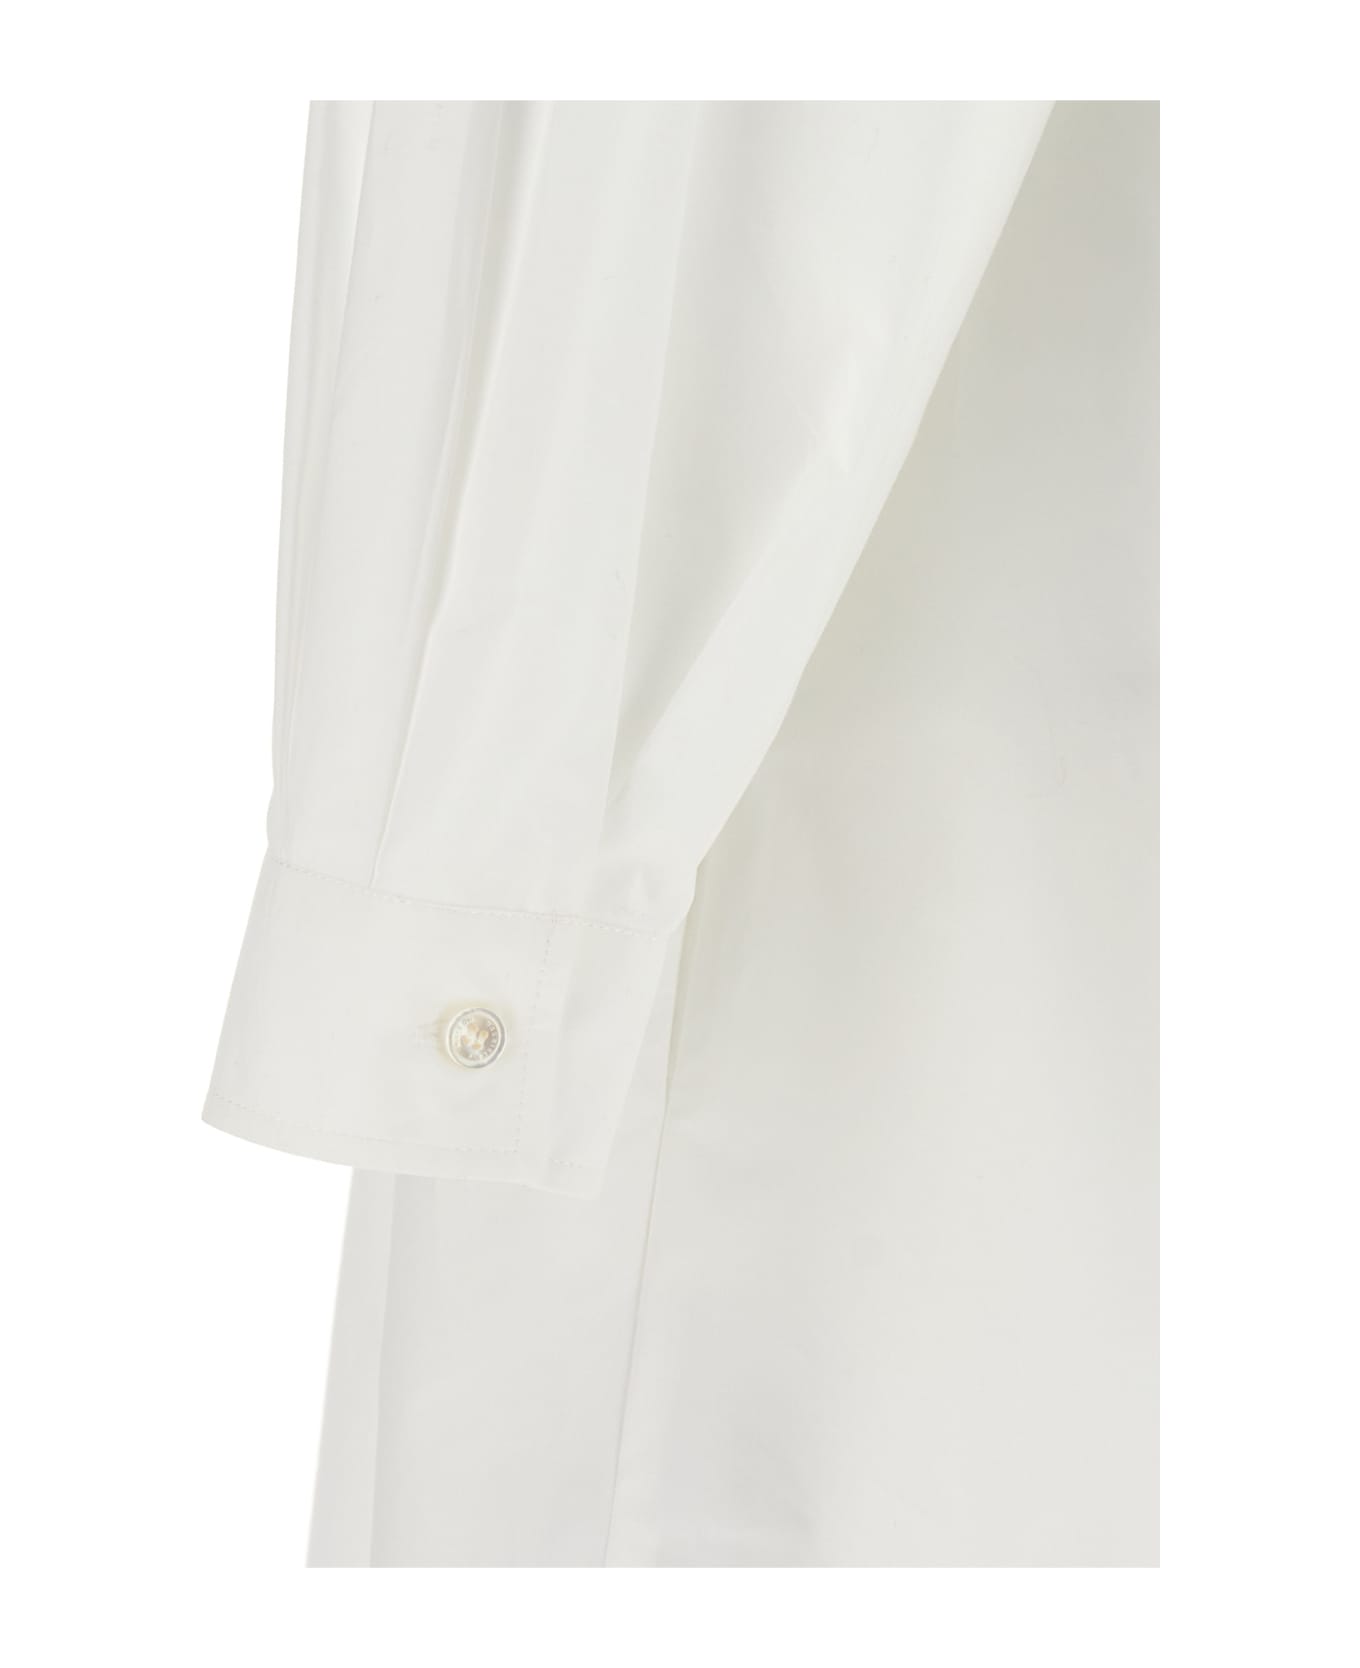 MM6 Maison Margiela 'numeric Signature' Shirt Dress - White/Black